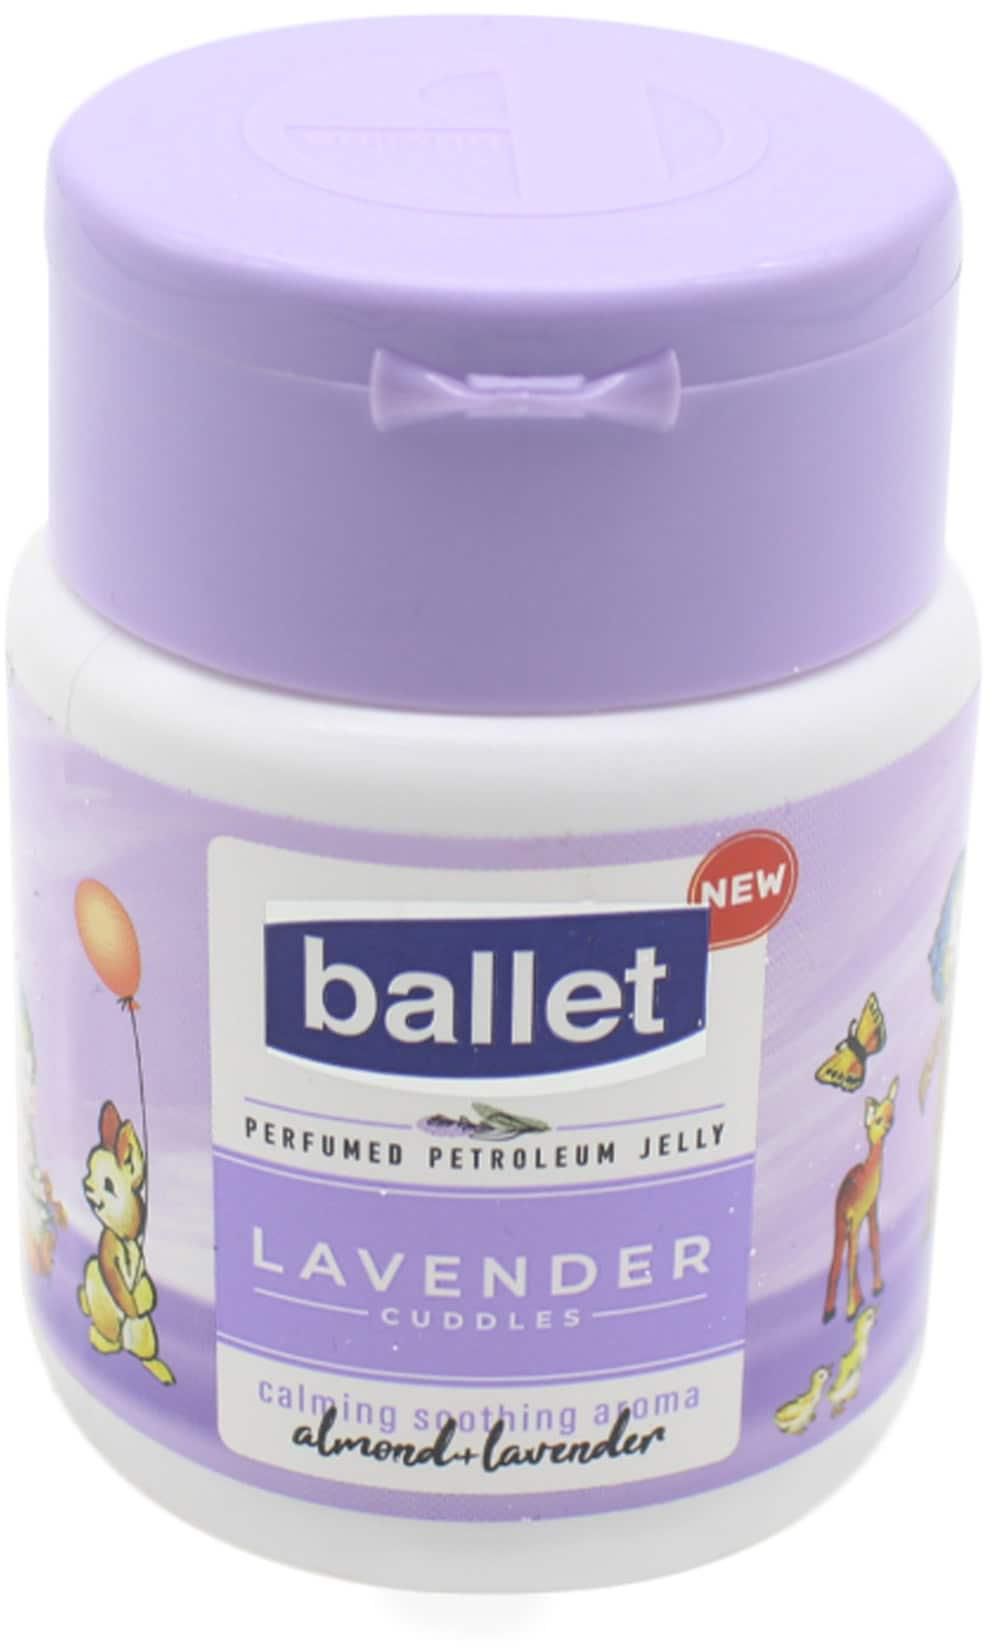 Ballet Lavender Cuddles Perfumed Petroleum Jelly 100g